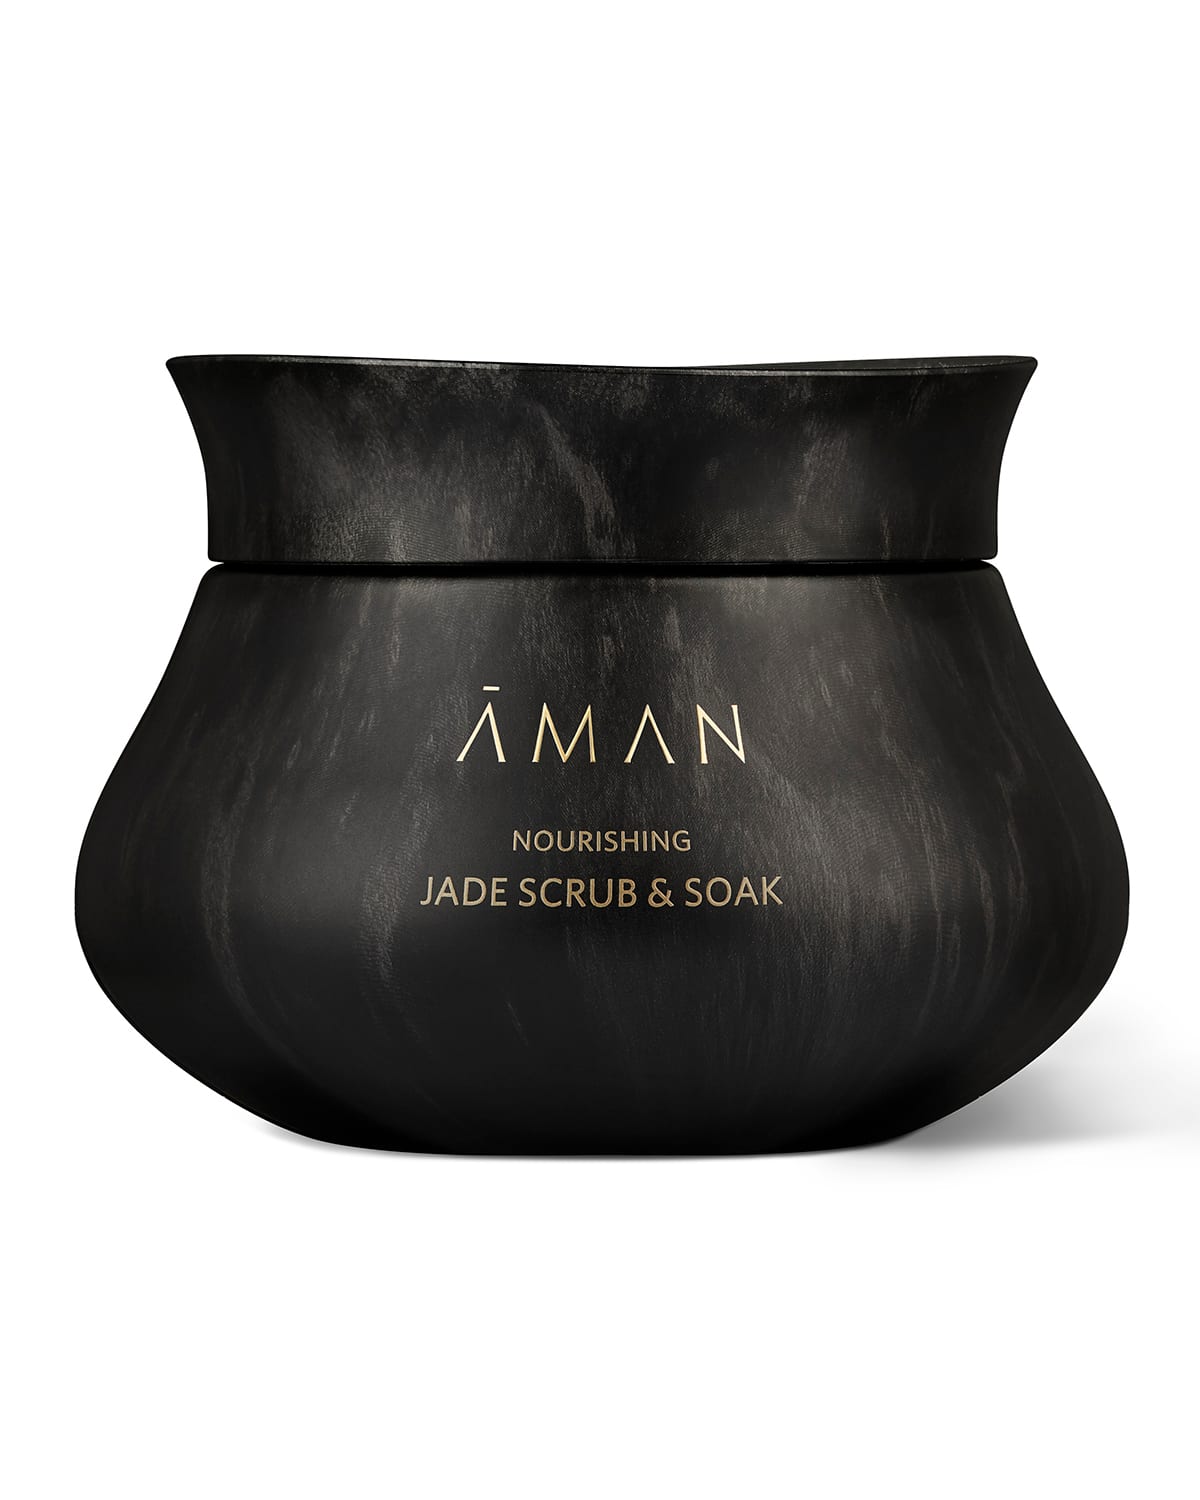 Aman Nourishing Jade Scrub and Soak